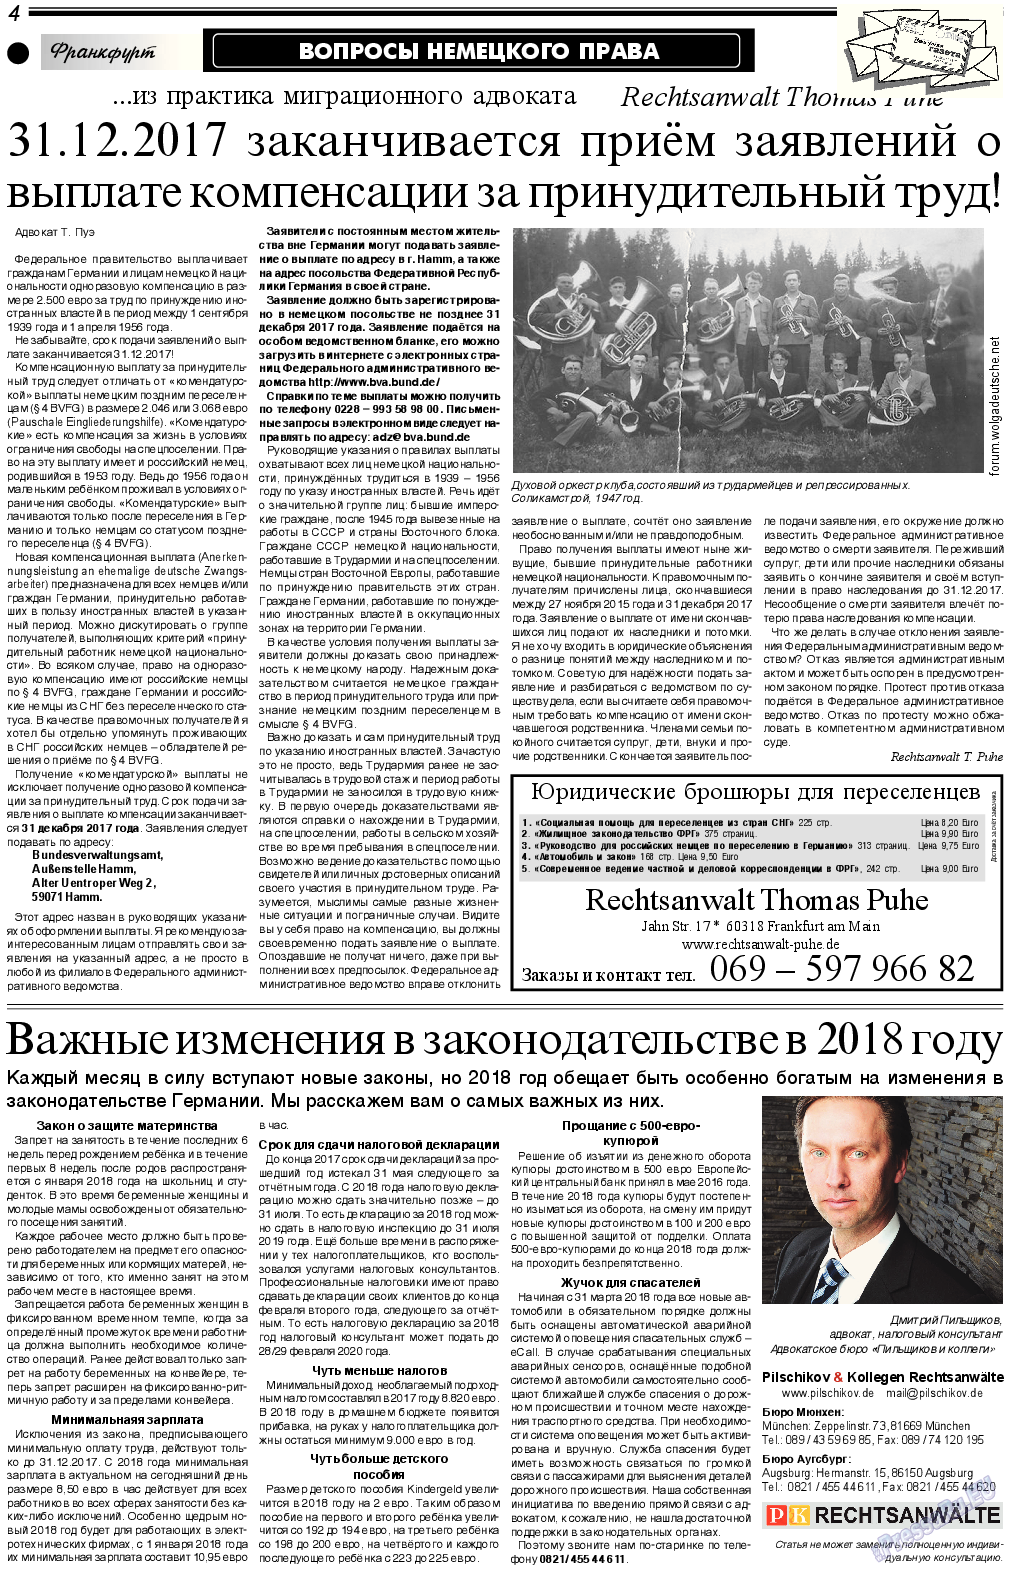 Вечерняя газета, газета. 2017 №11 стр.4